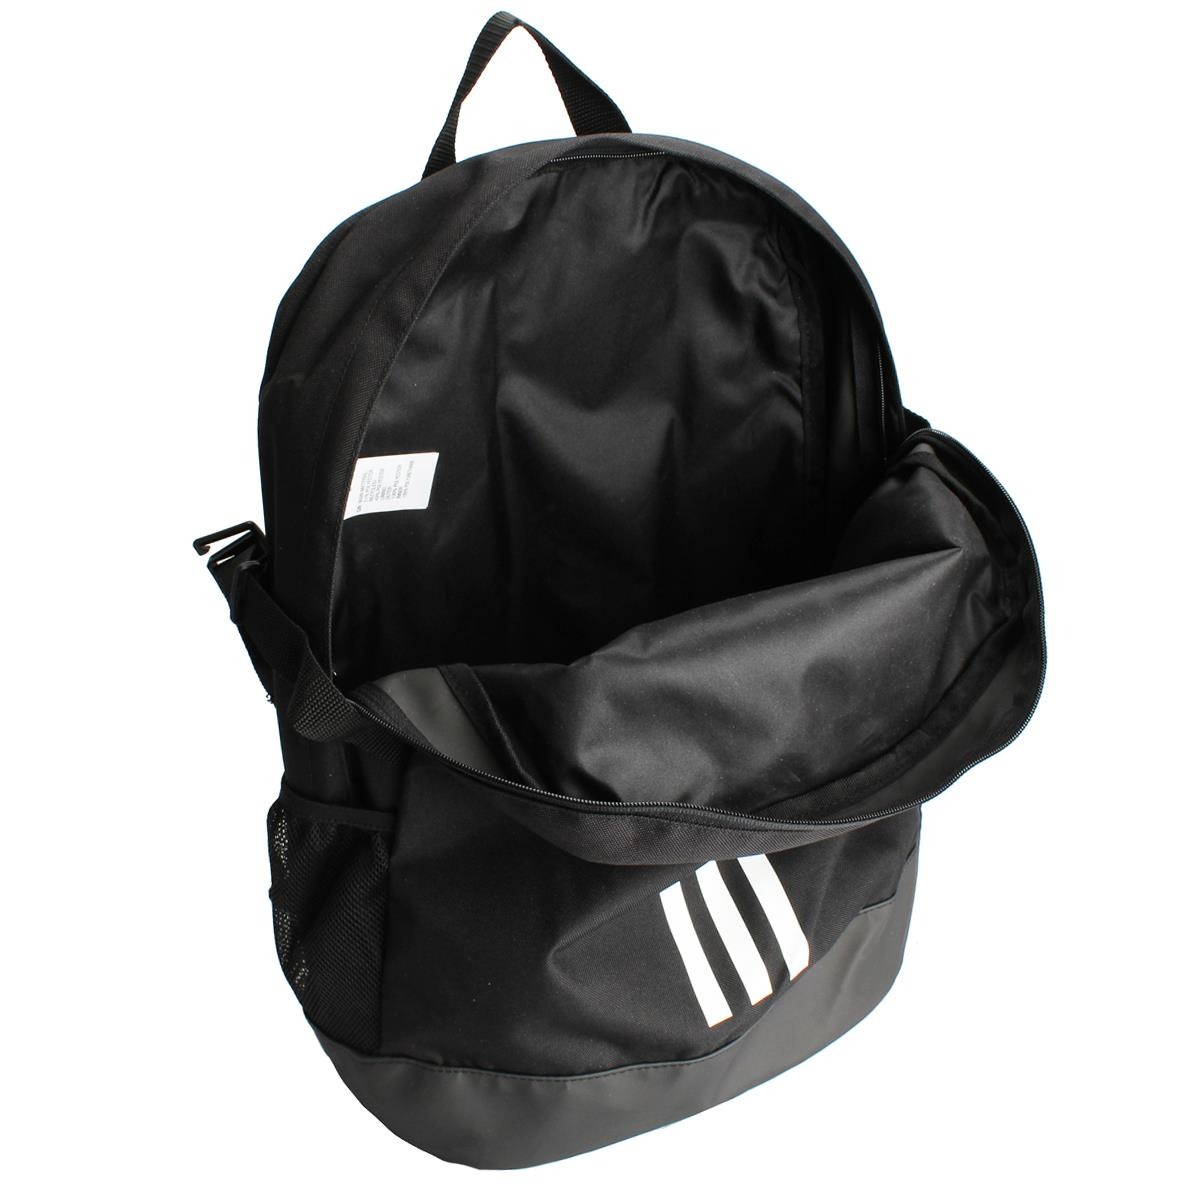 Adidas Black school bag